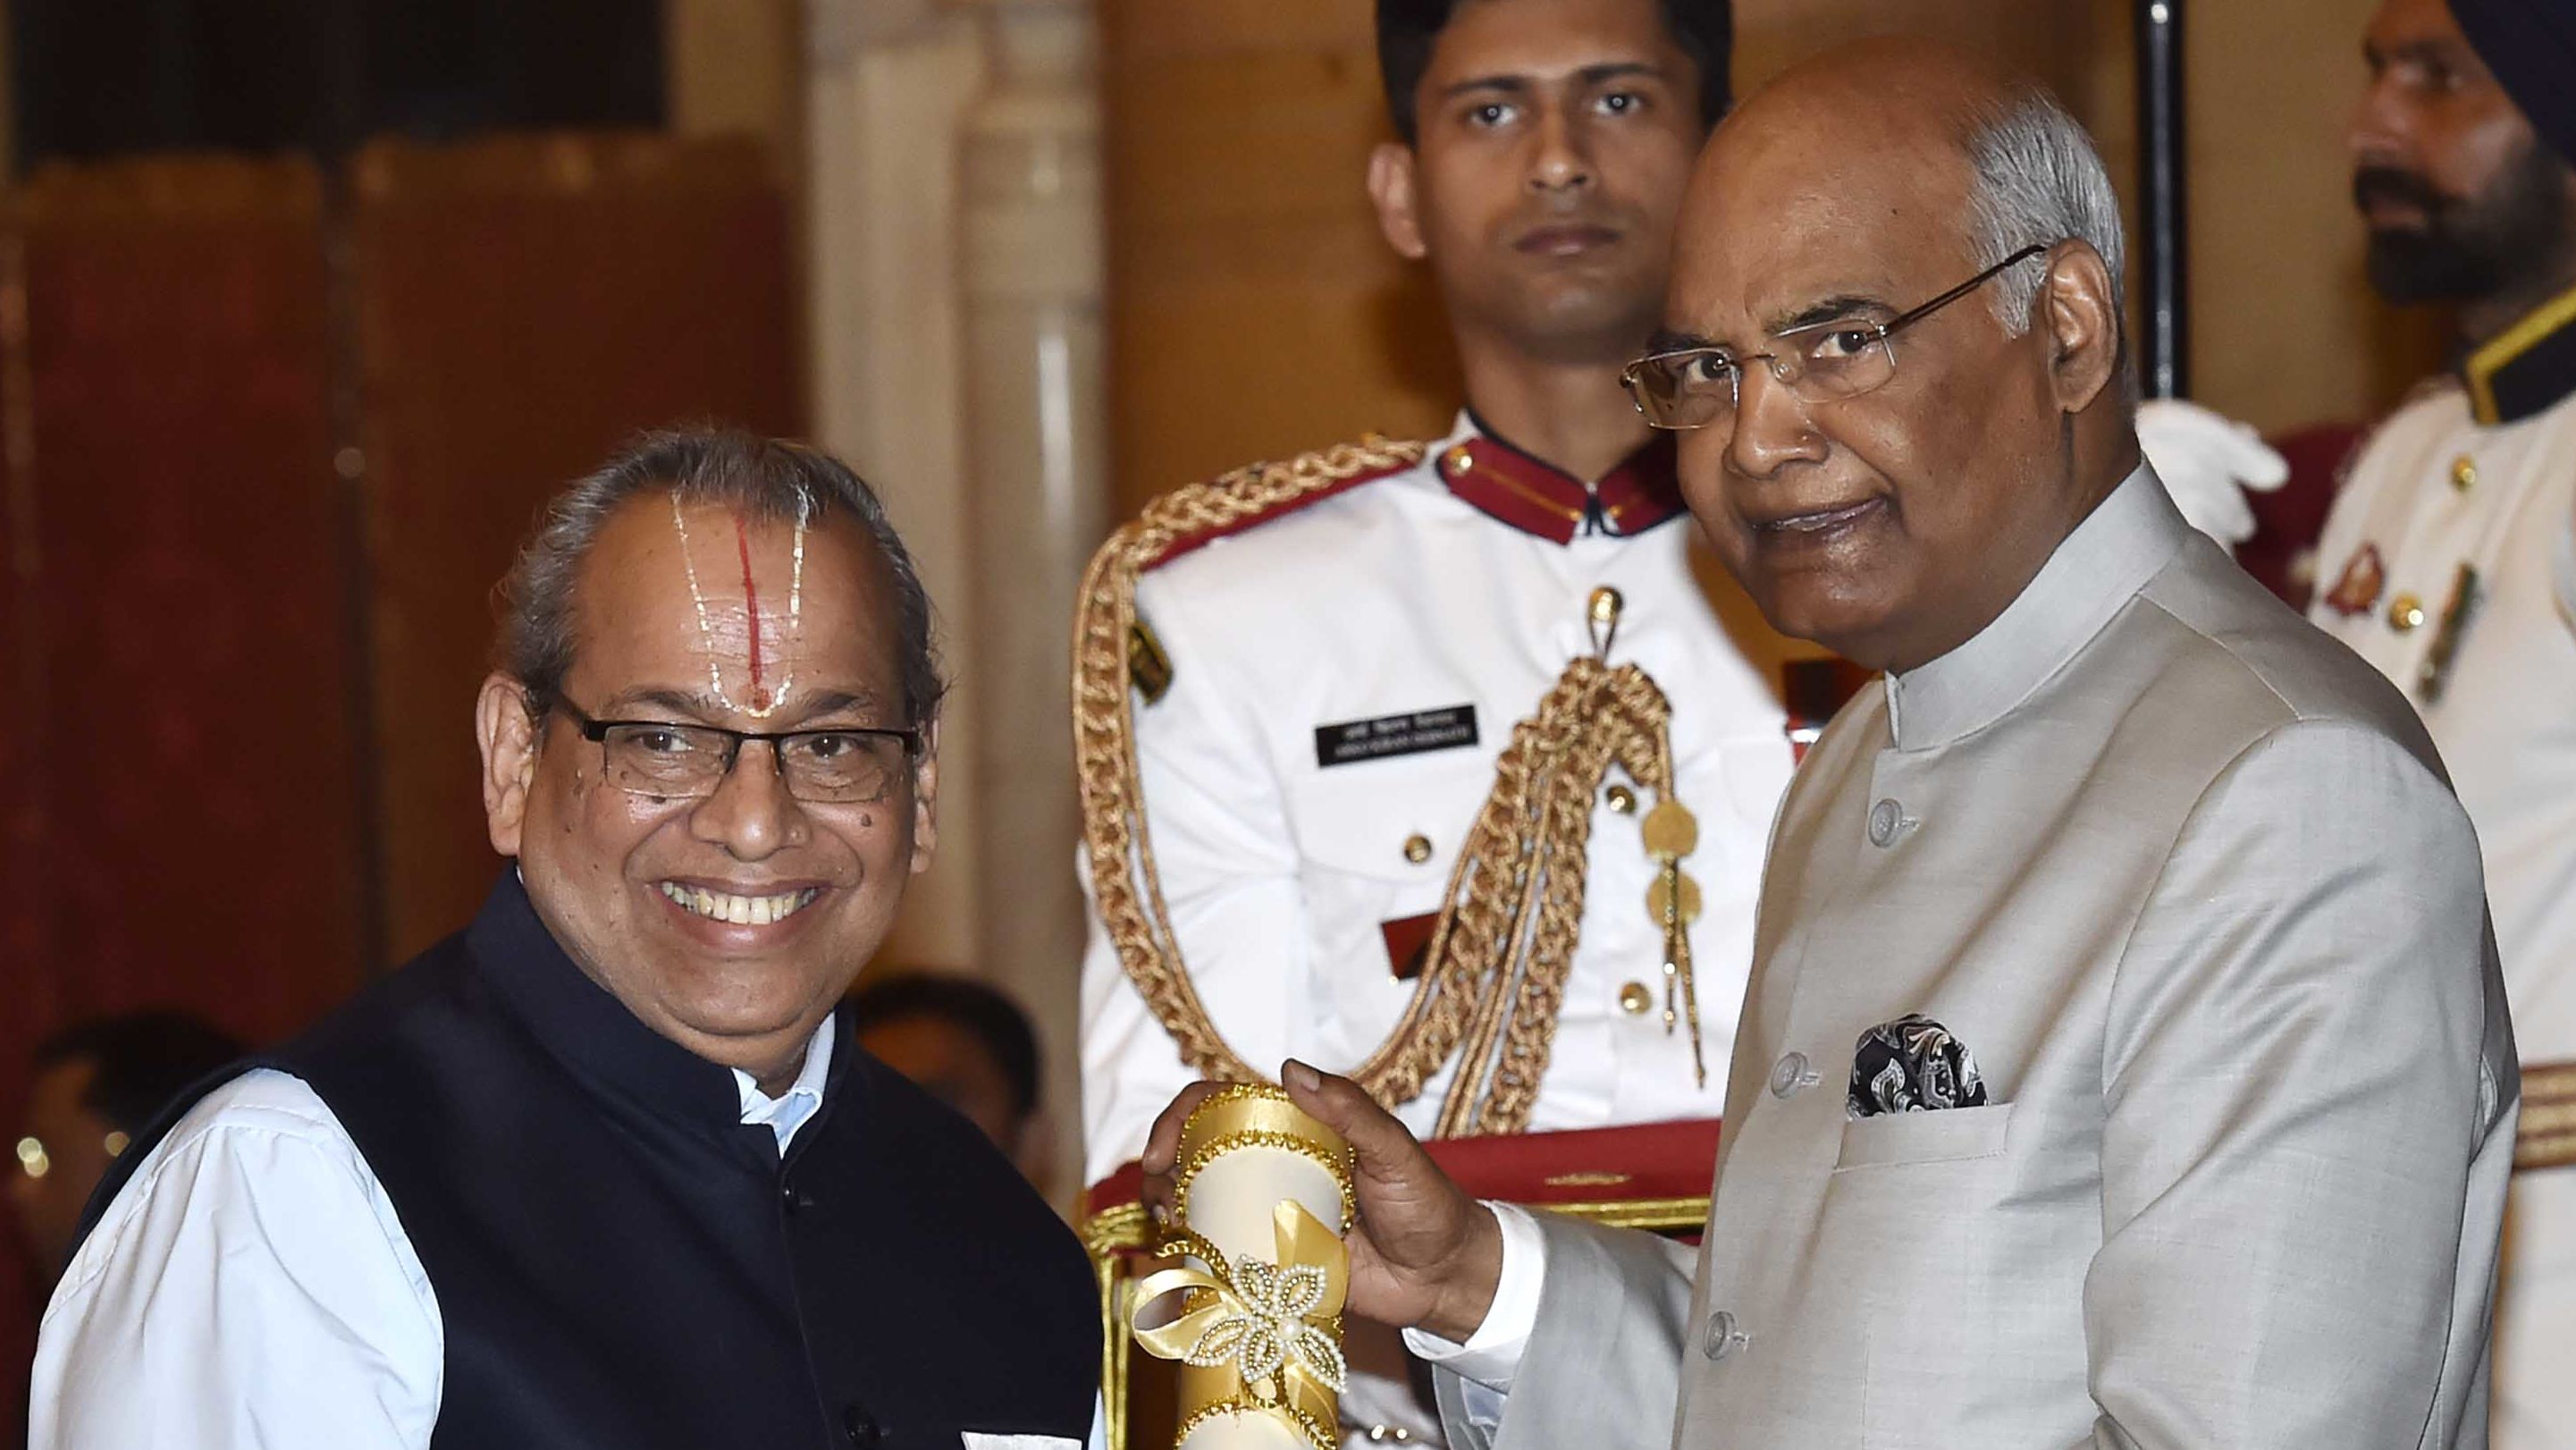 Rajagopalan Vasudevan receives the Padma Shri award from President Ram Nath Kovind in March 2018.